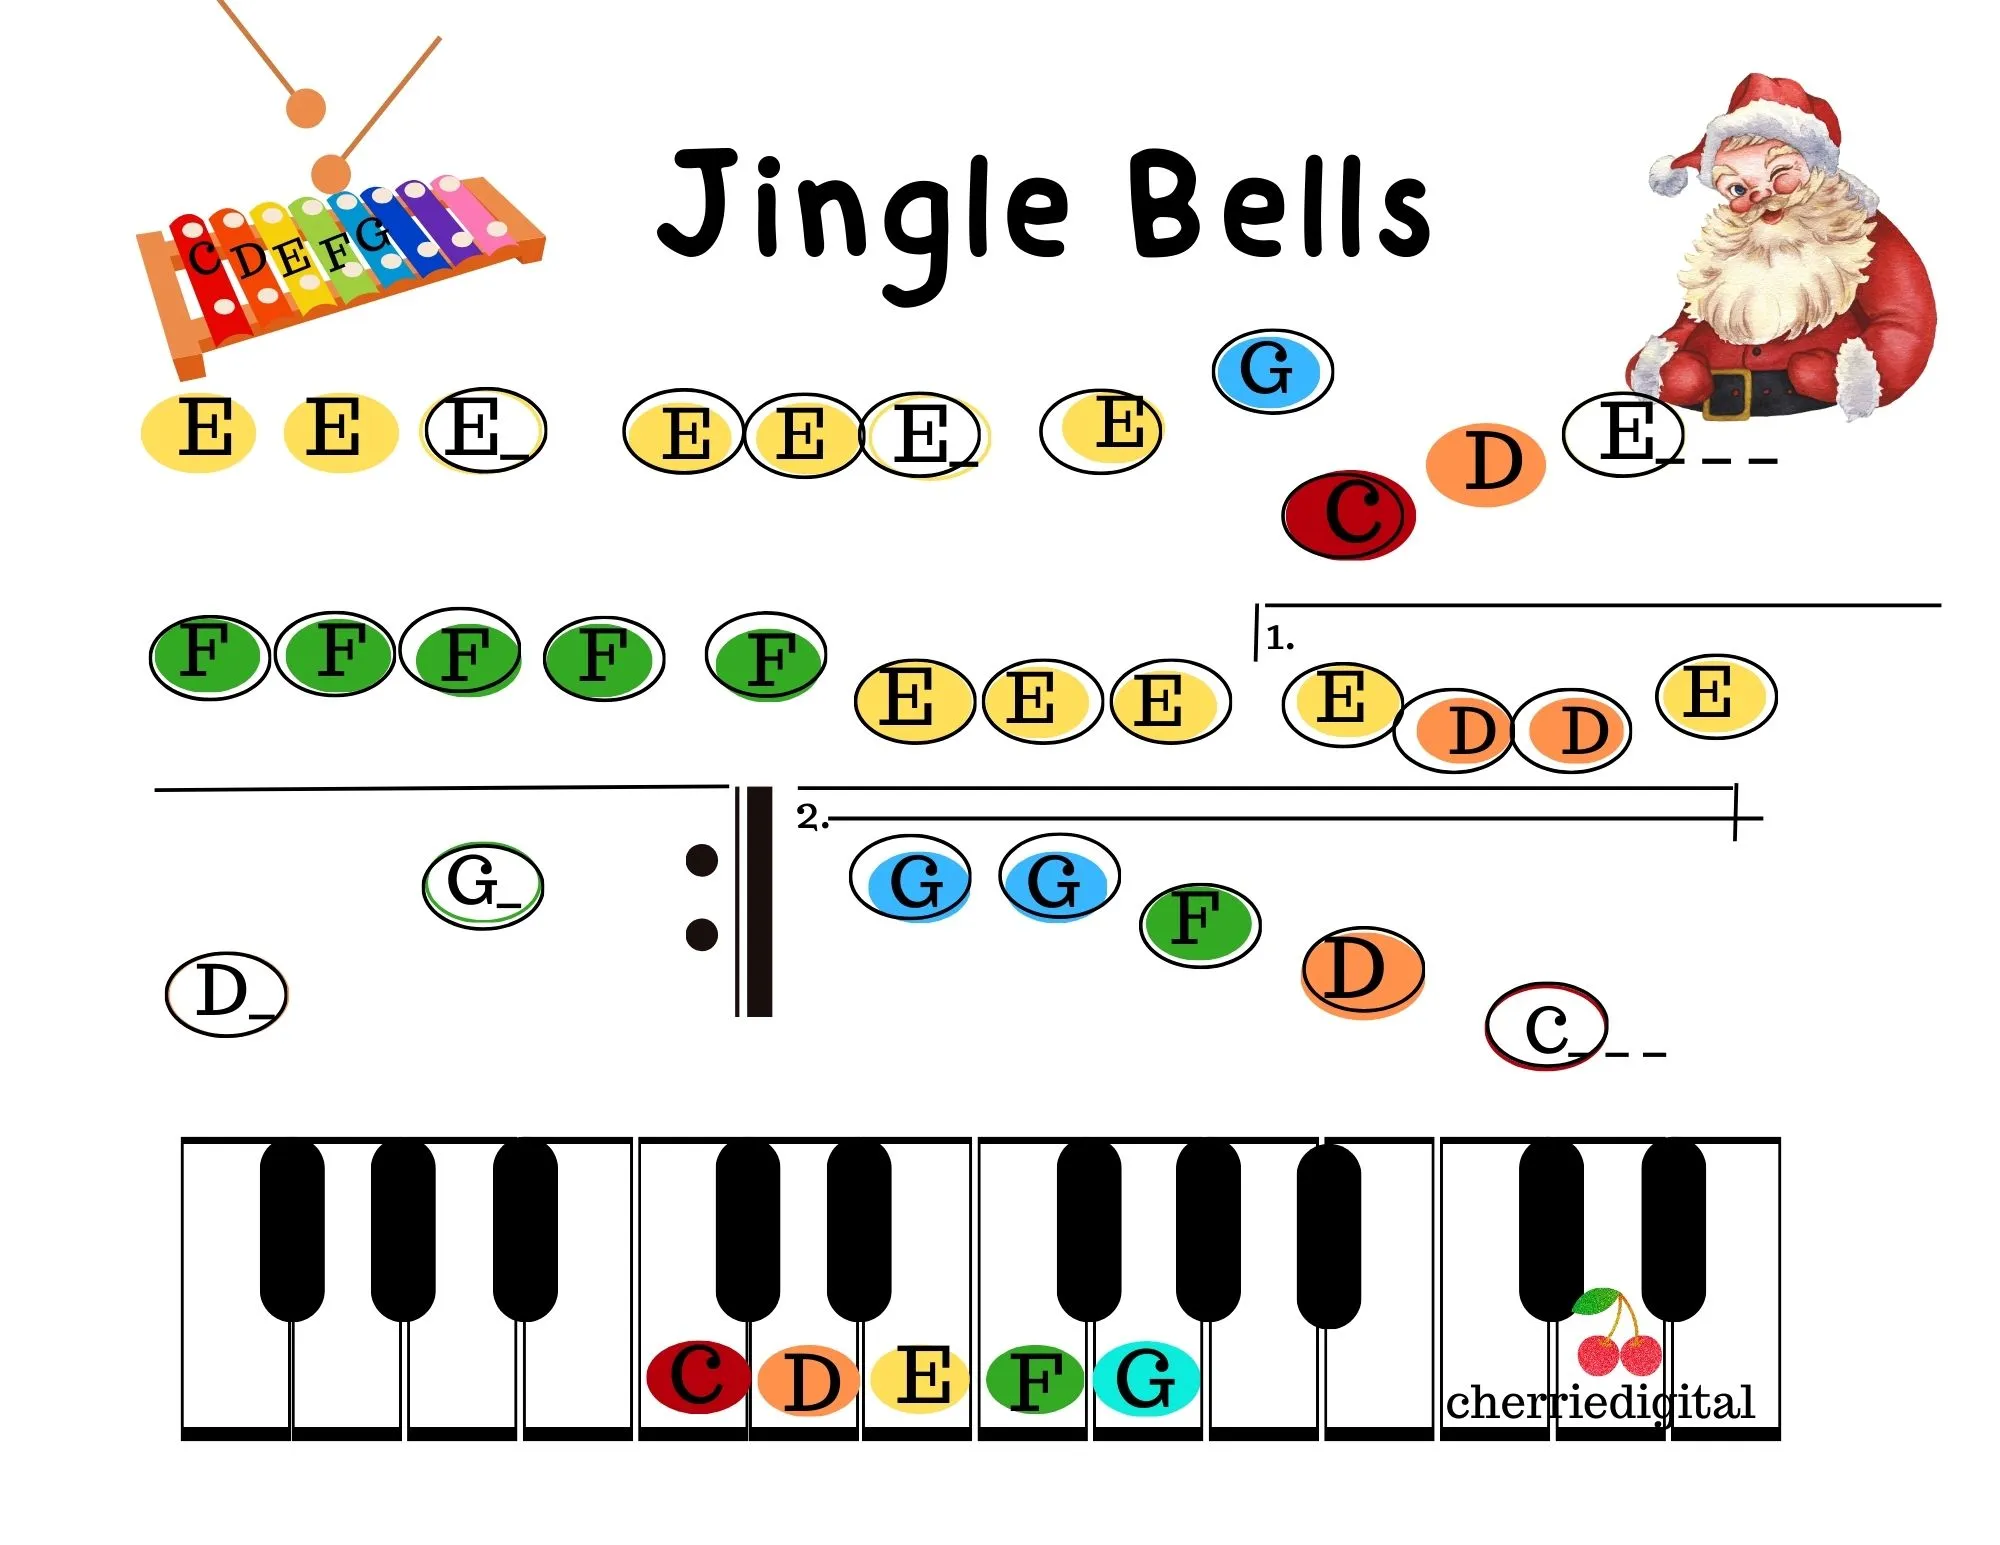 Jingle bells easy sheet music piano notes